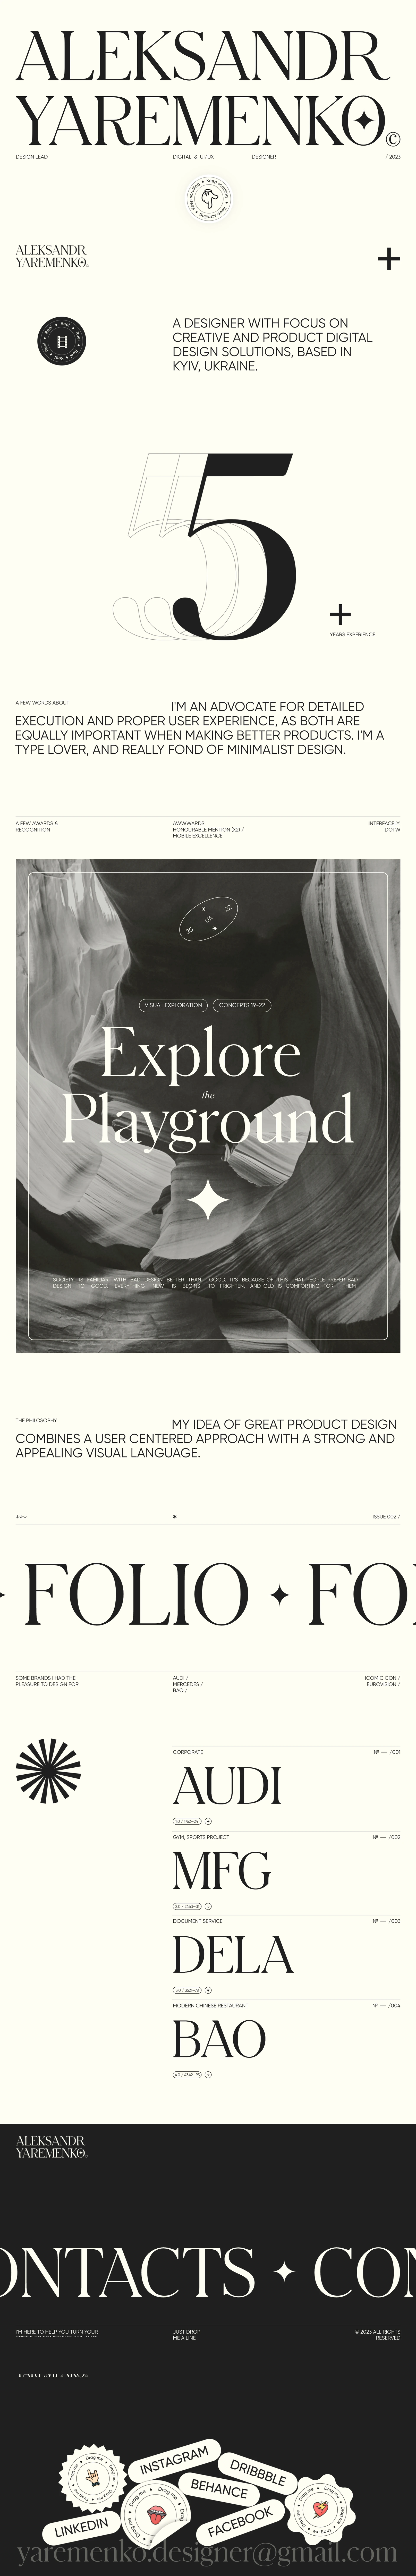 Aleksandr Yaremenko Landing Page Example: Portfolio of Aleksandr Yaremenko, design lead, digital & ui/ux designer. Primary focus on creative and product design solutions.